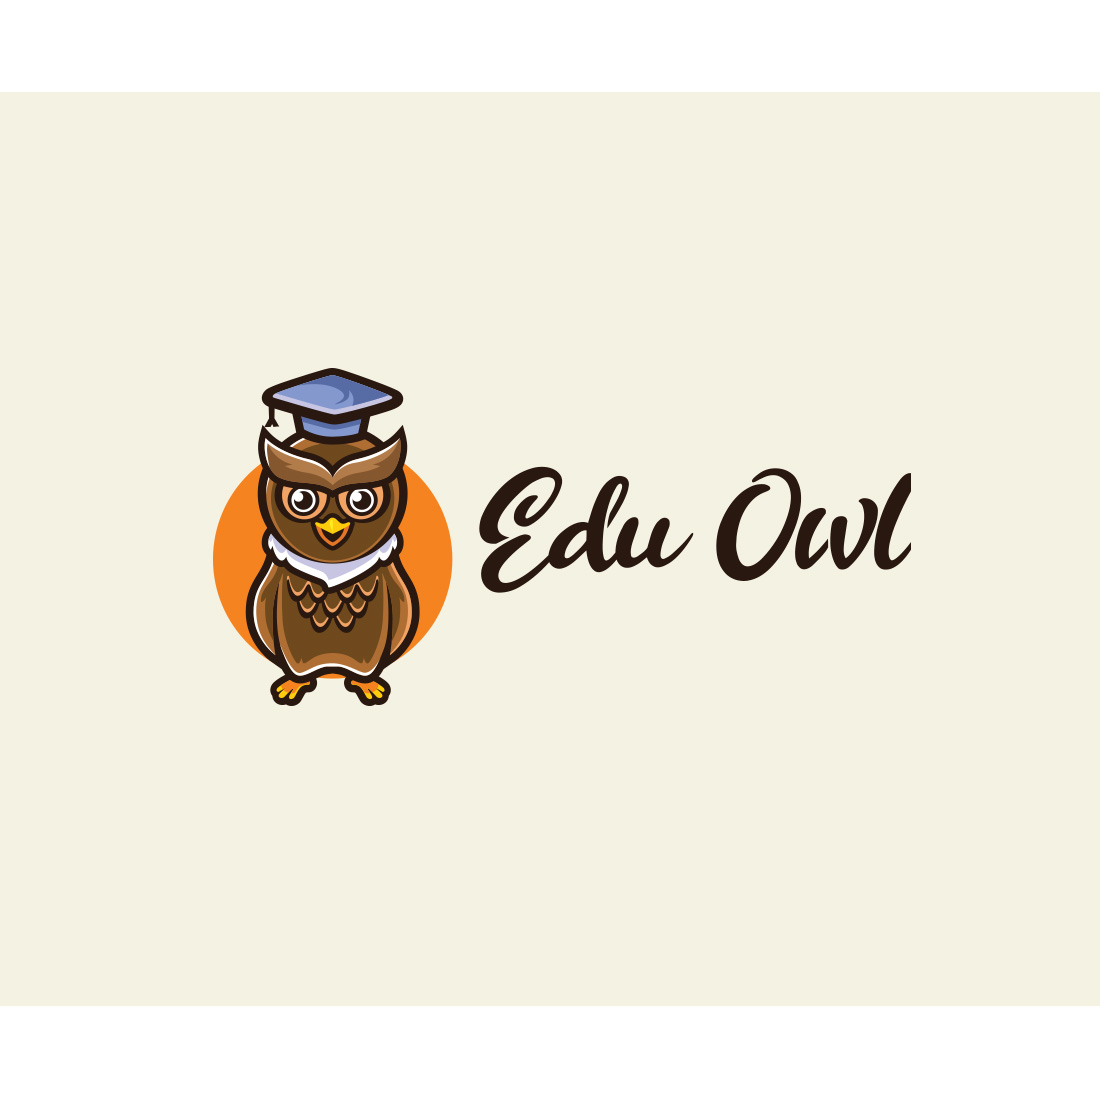 Edu Owl Character Logo Design cover image.